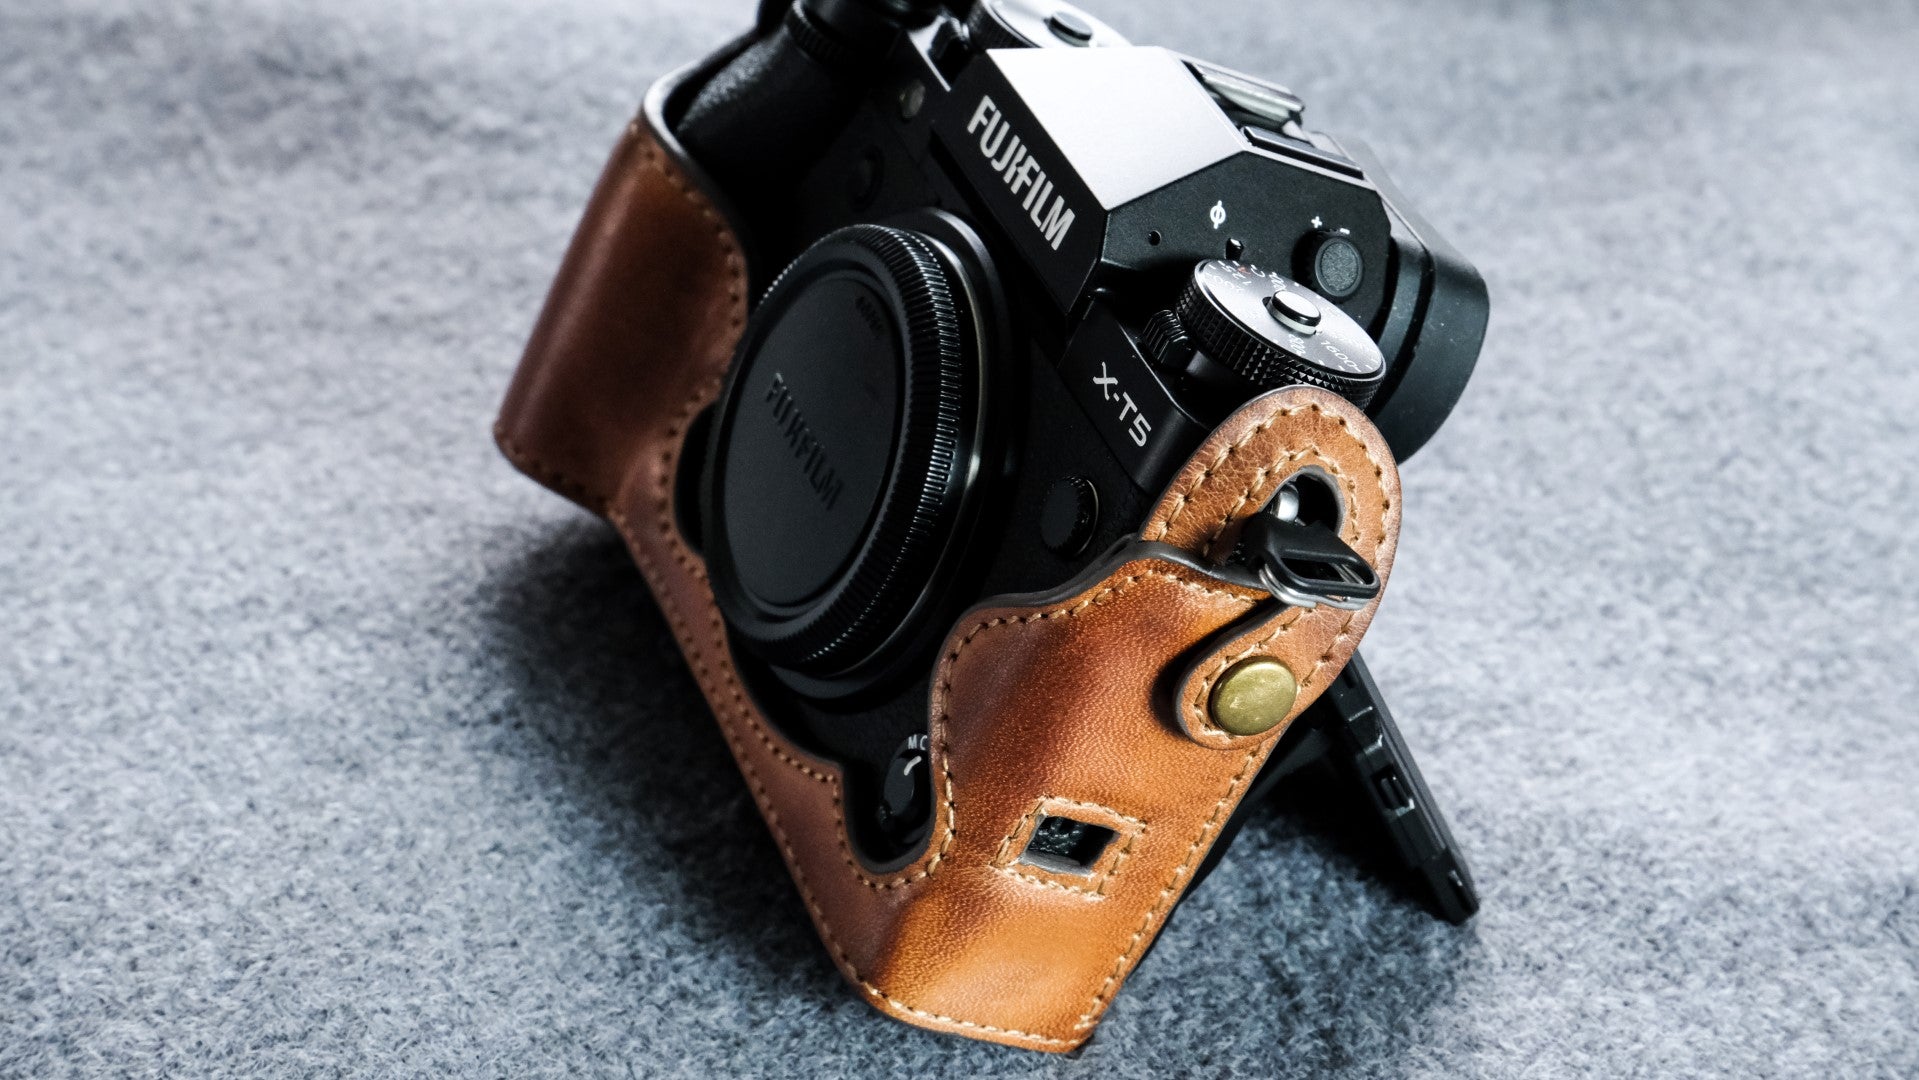 Camera Half Case For Fujifilm XT5 X-T5 Retro Insert Genuine Leather VR  Handmade